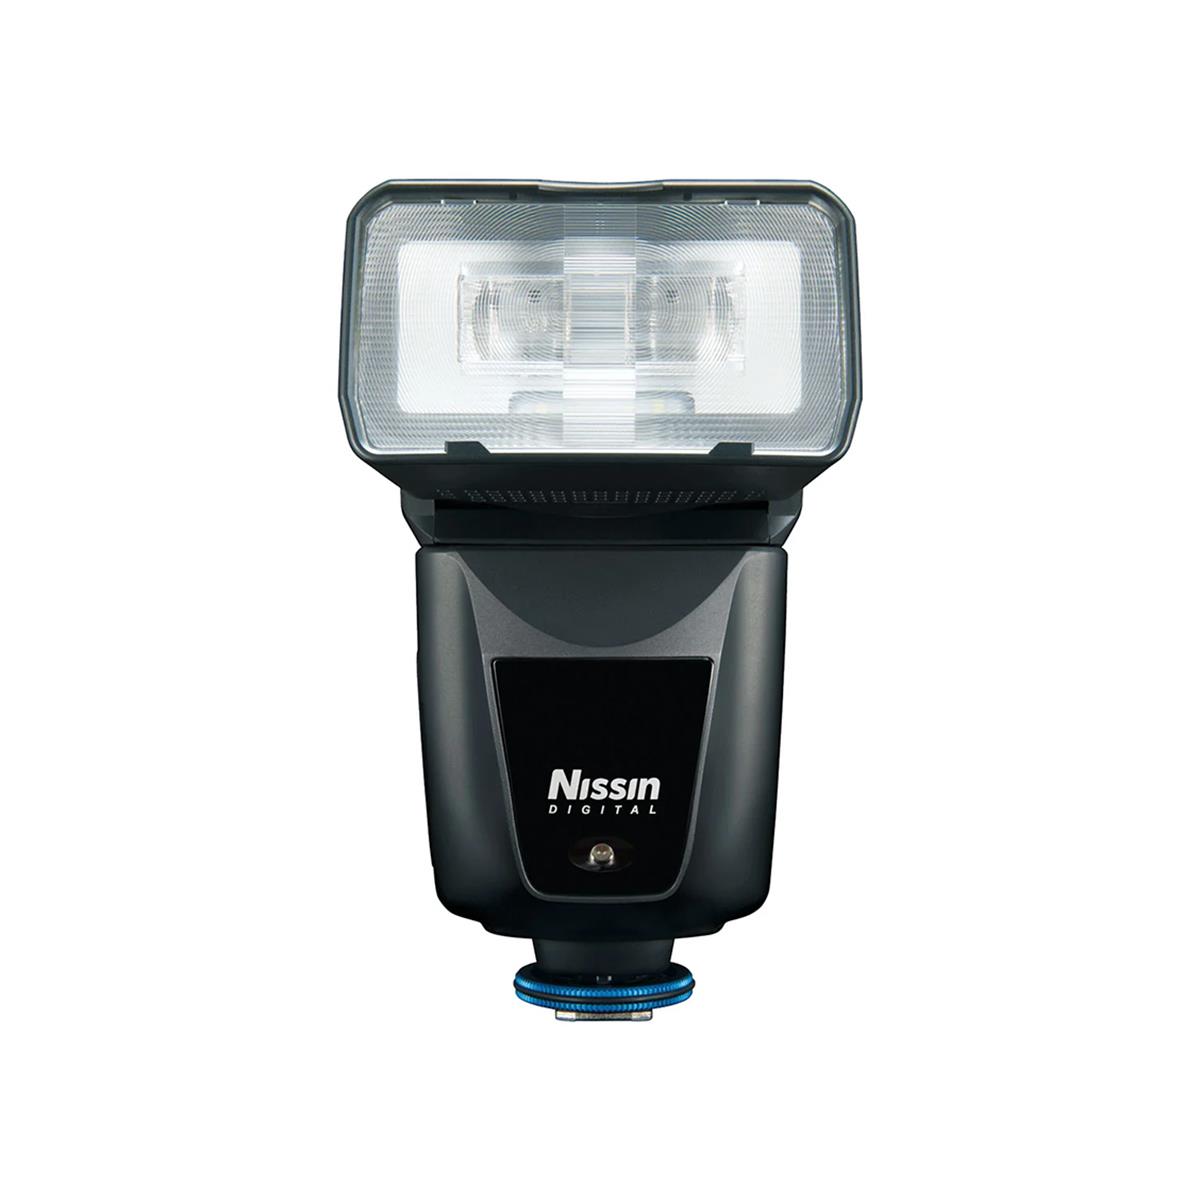 Image of Nissin MG80 Pro Flash for Nikon Cameras